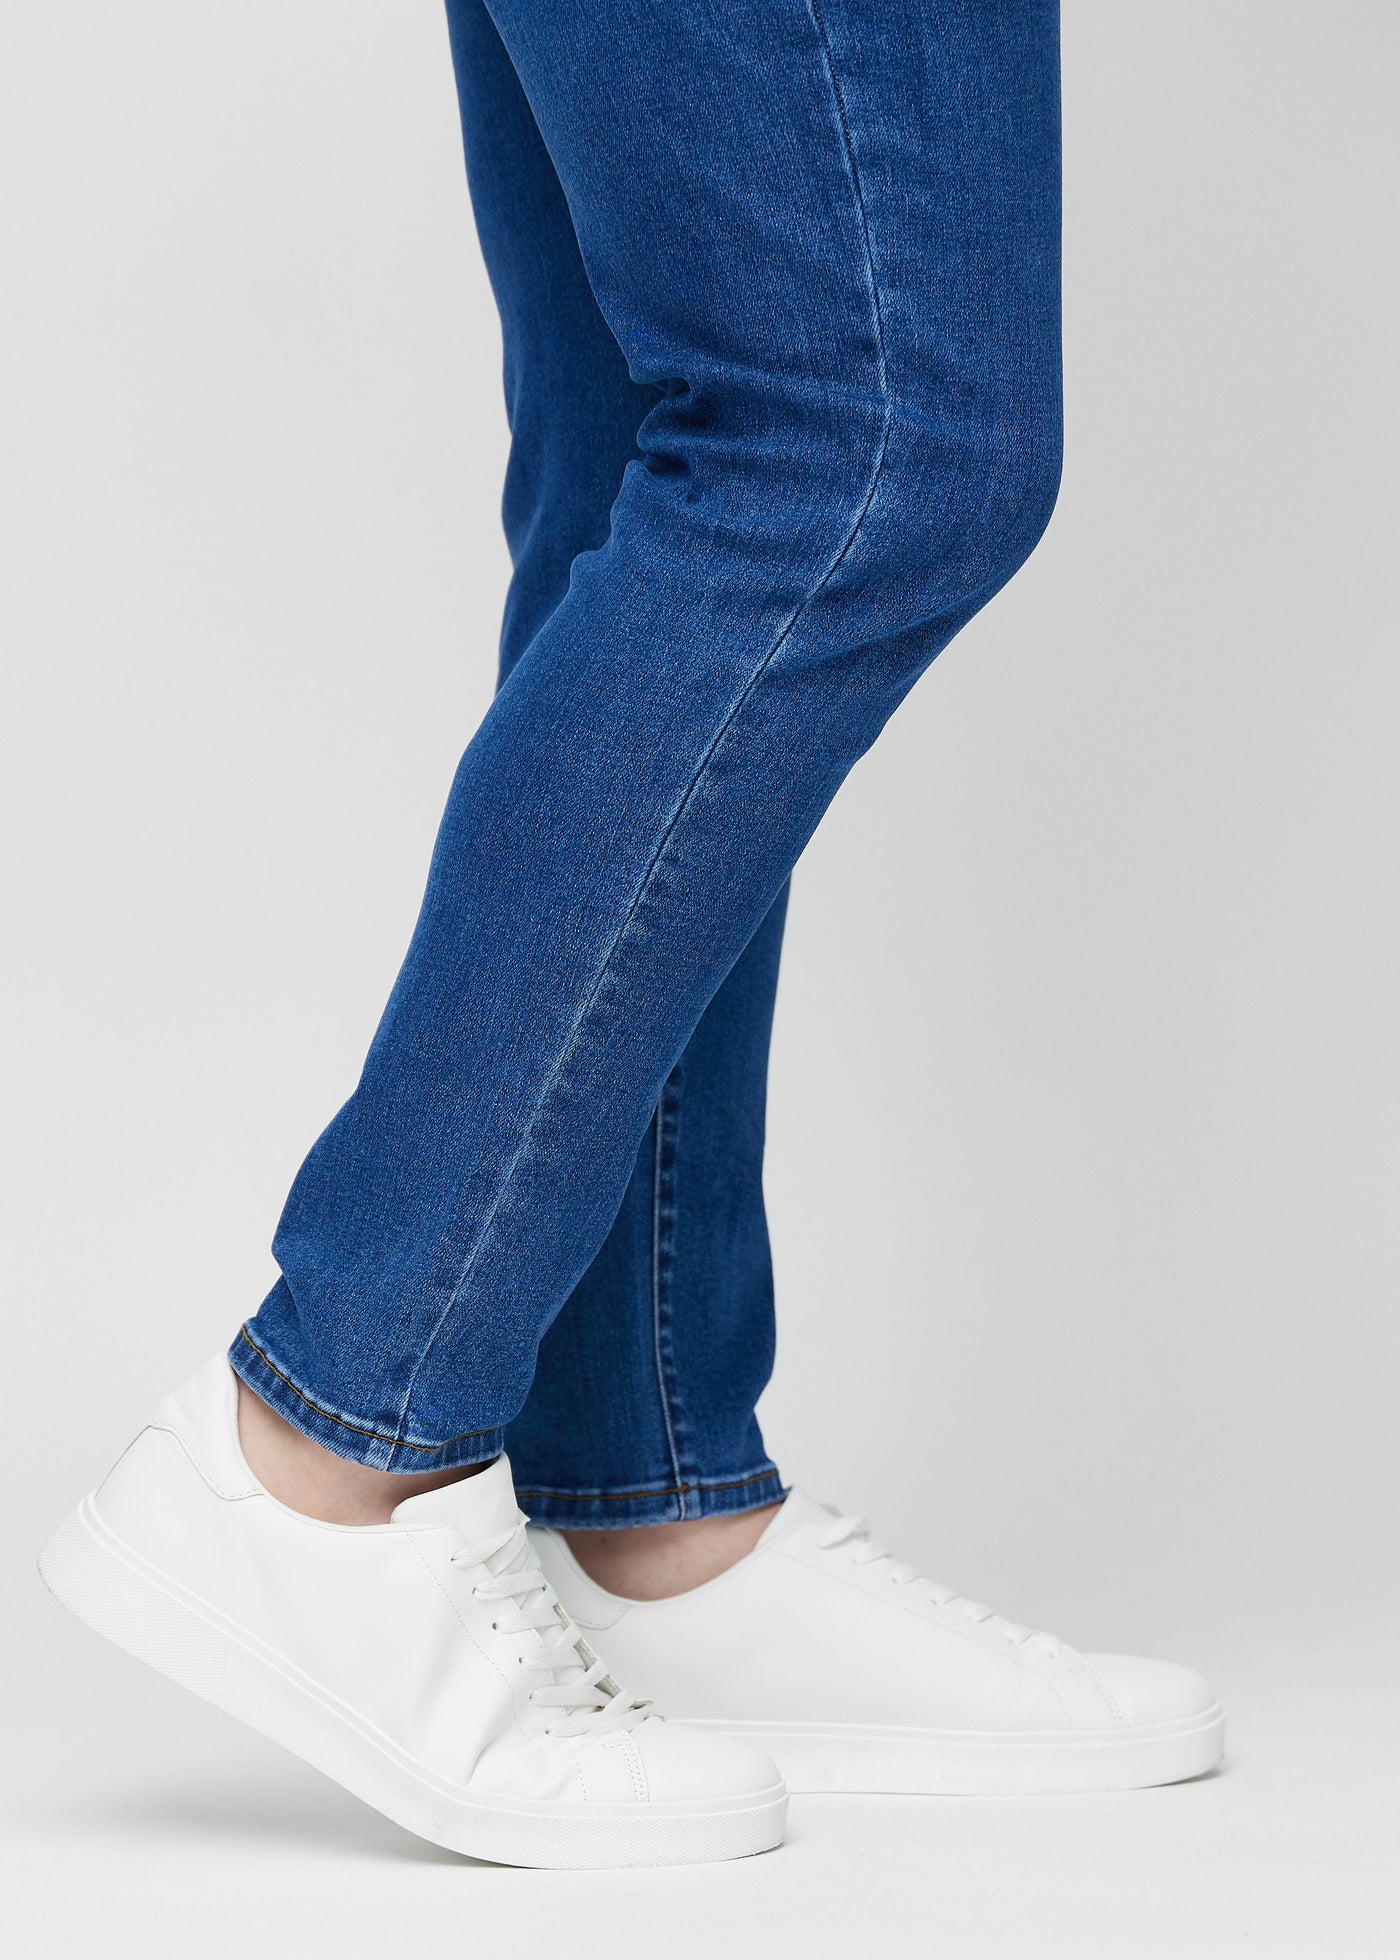 Perfect Jeans - Slim - Oceans™